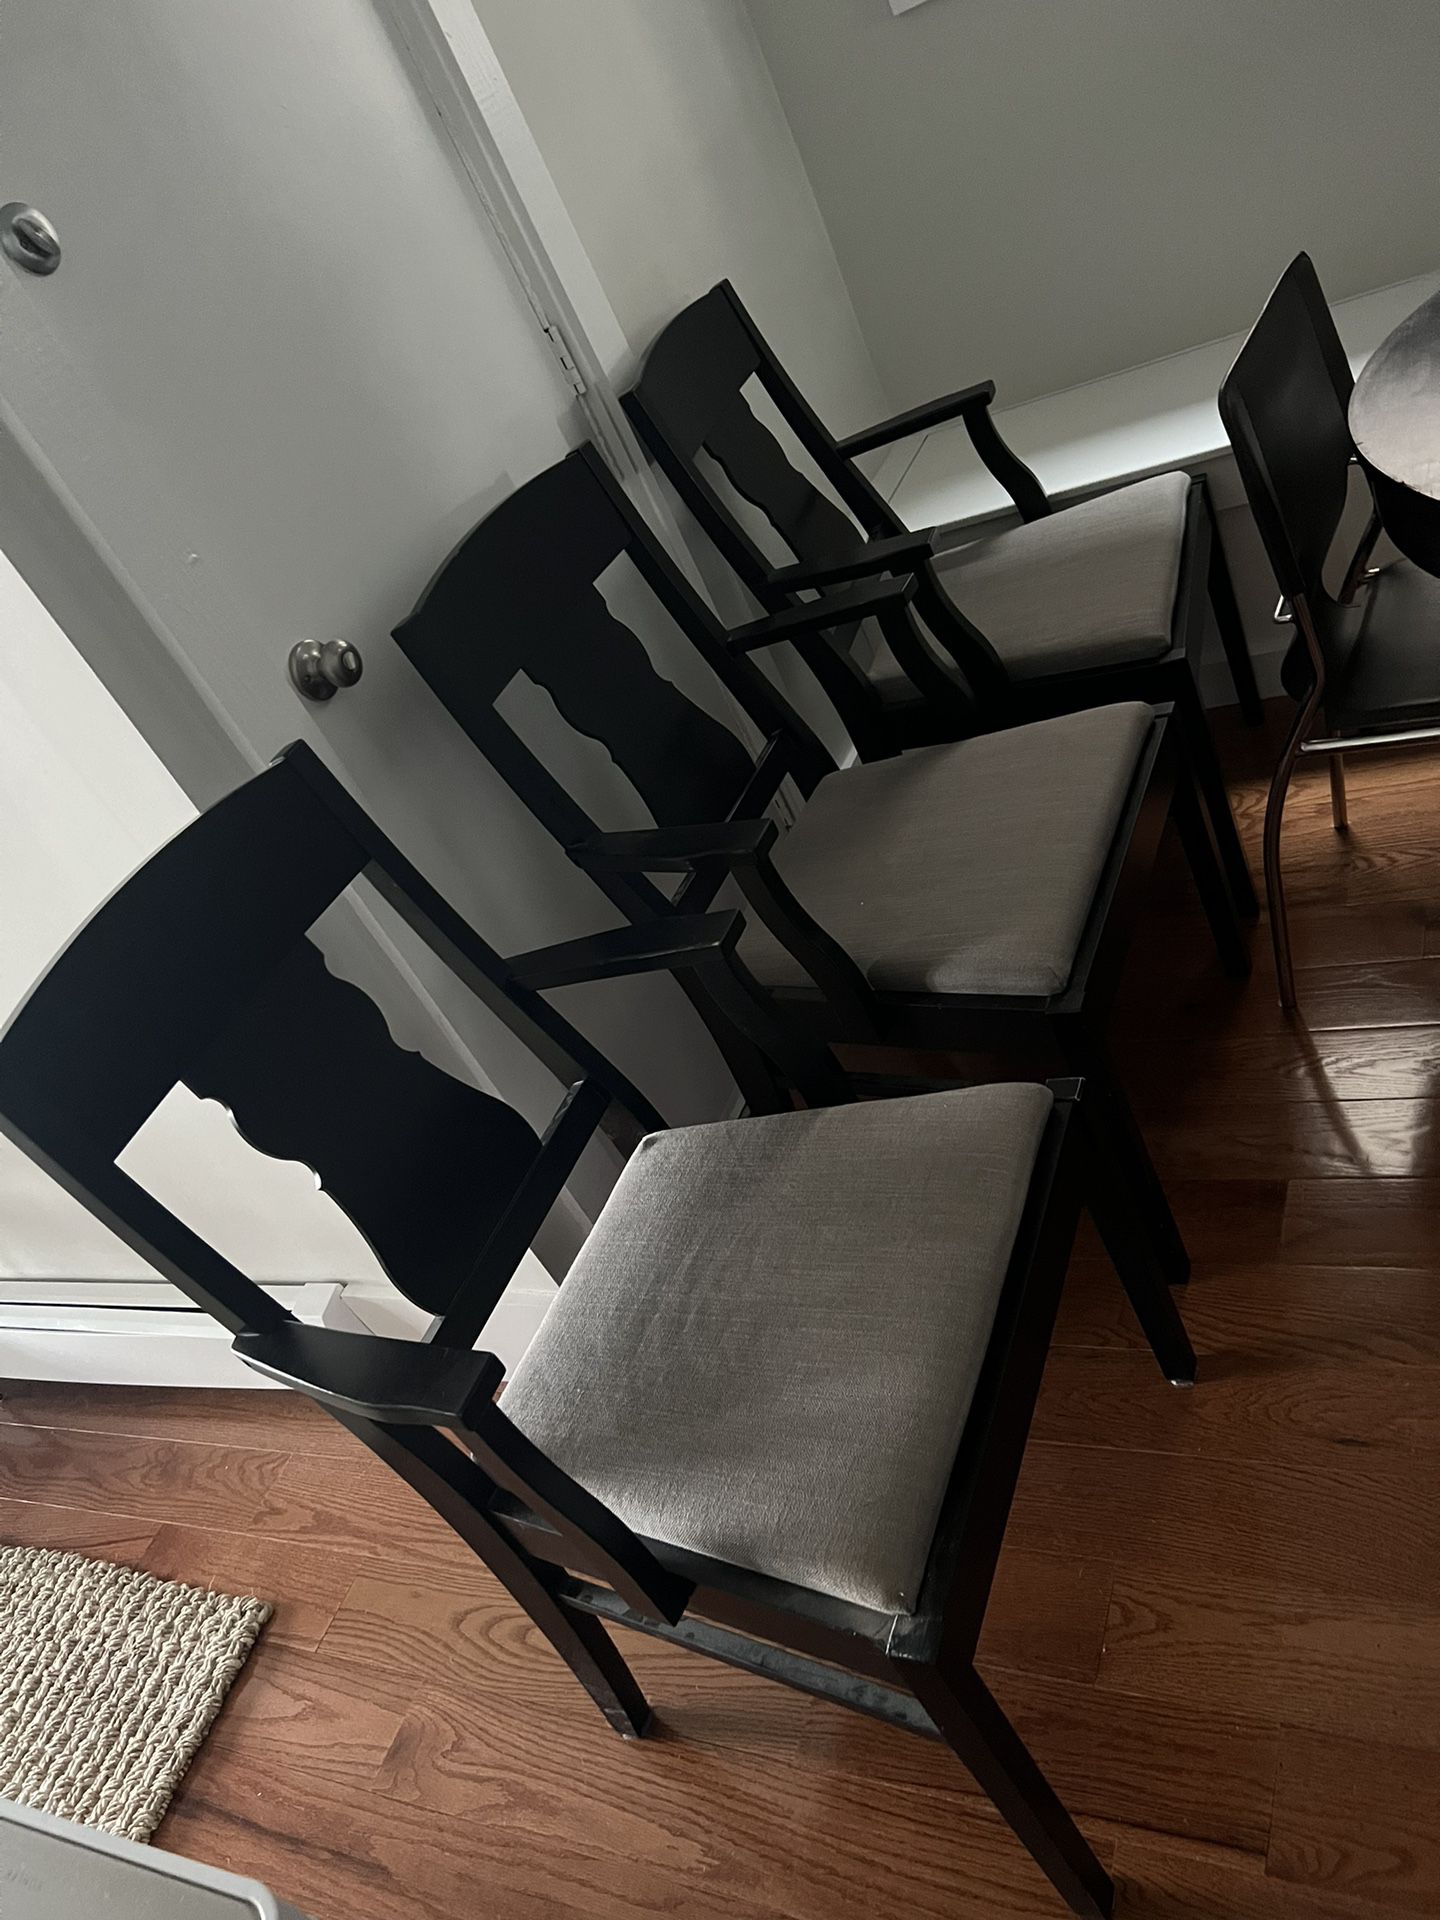 3 Sturdy Chairs